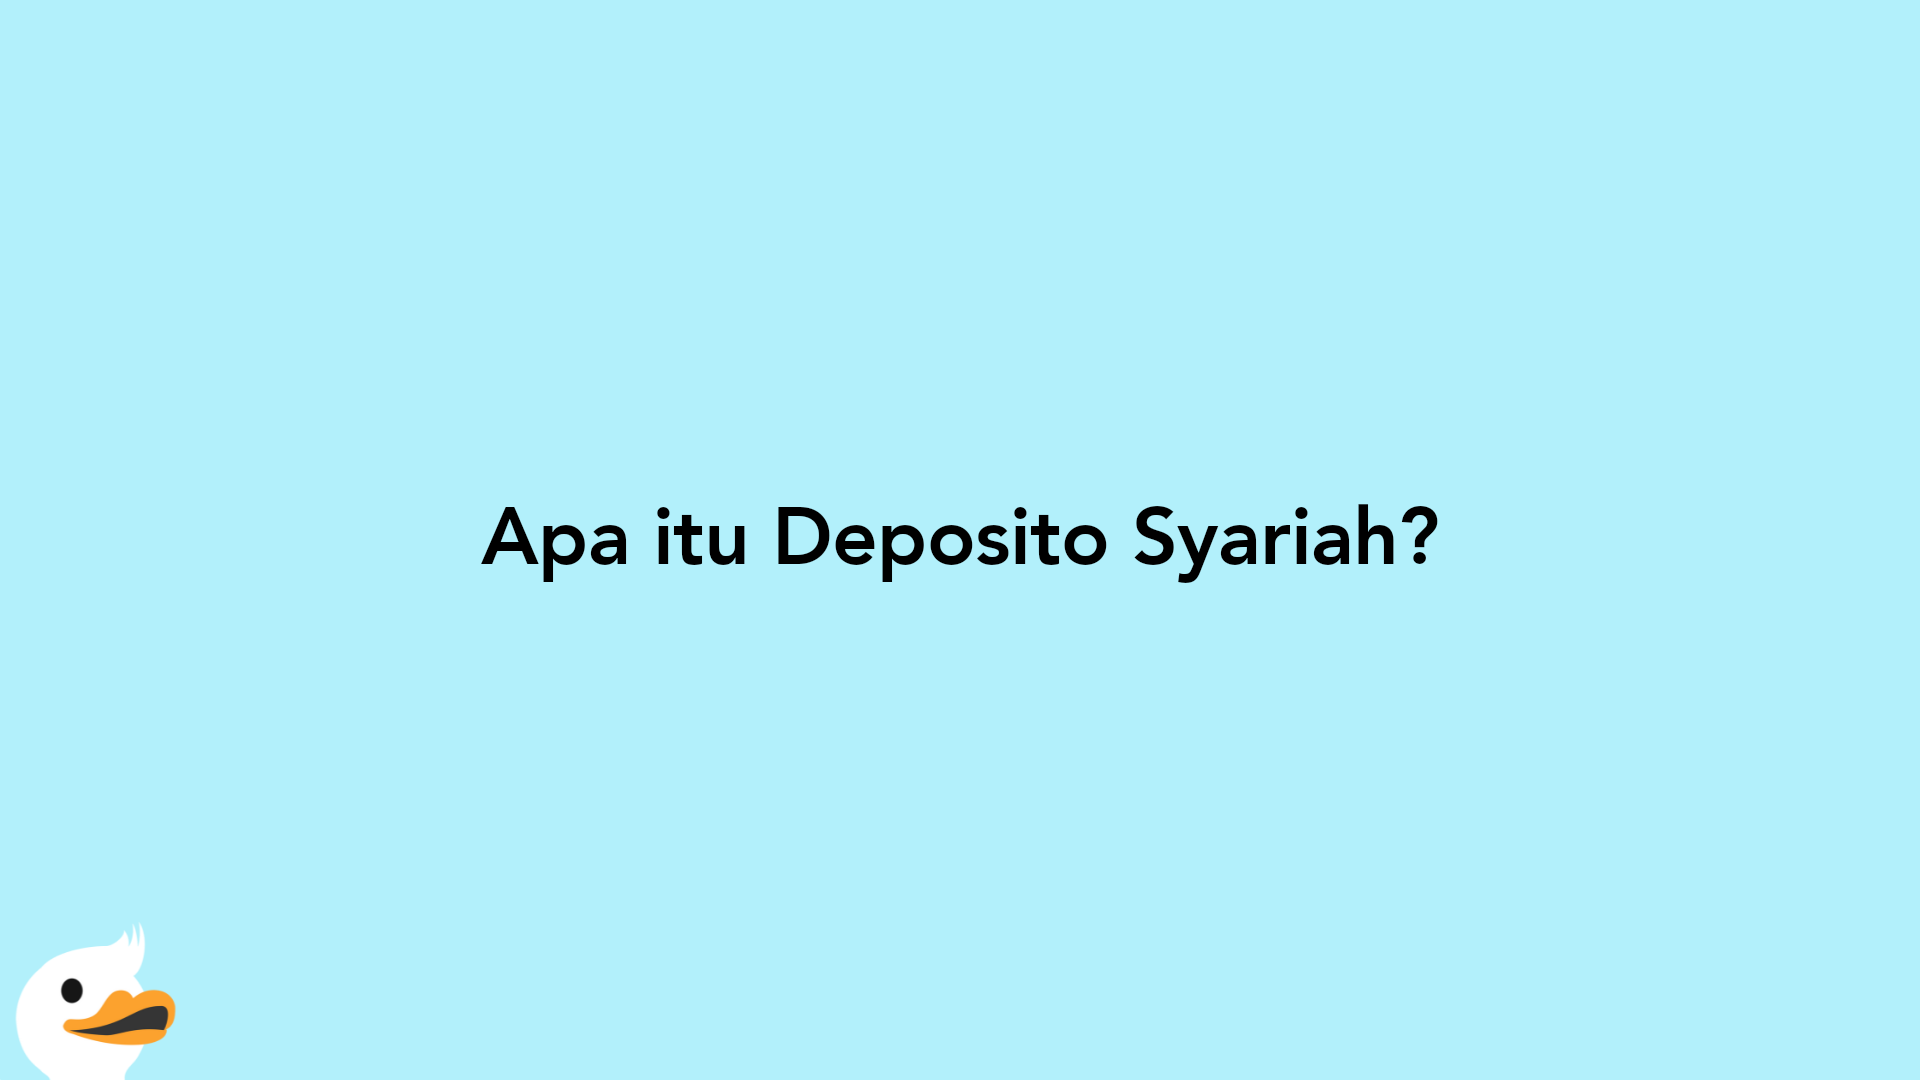 Apa itu Deposito Syariah?